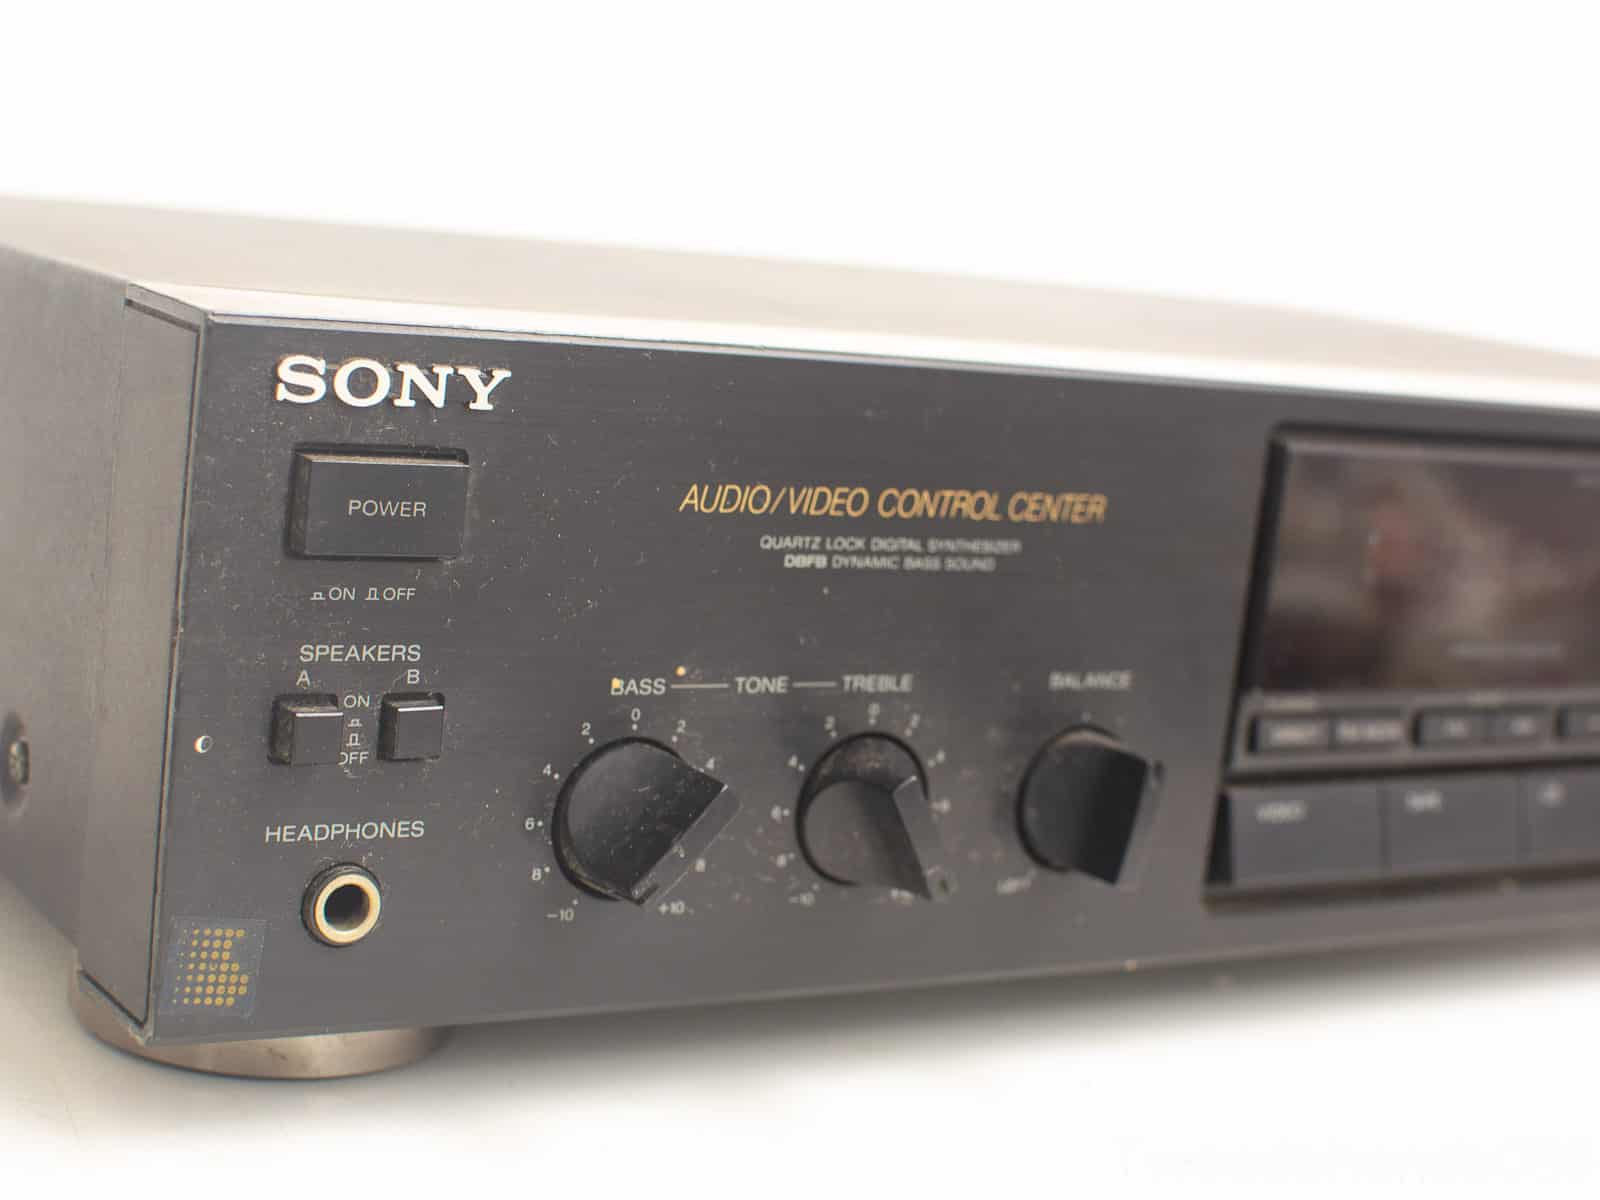 Sony audio video control center 23754